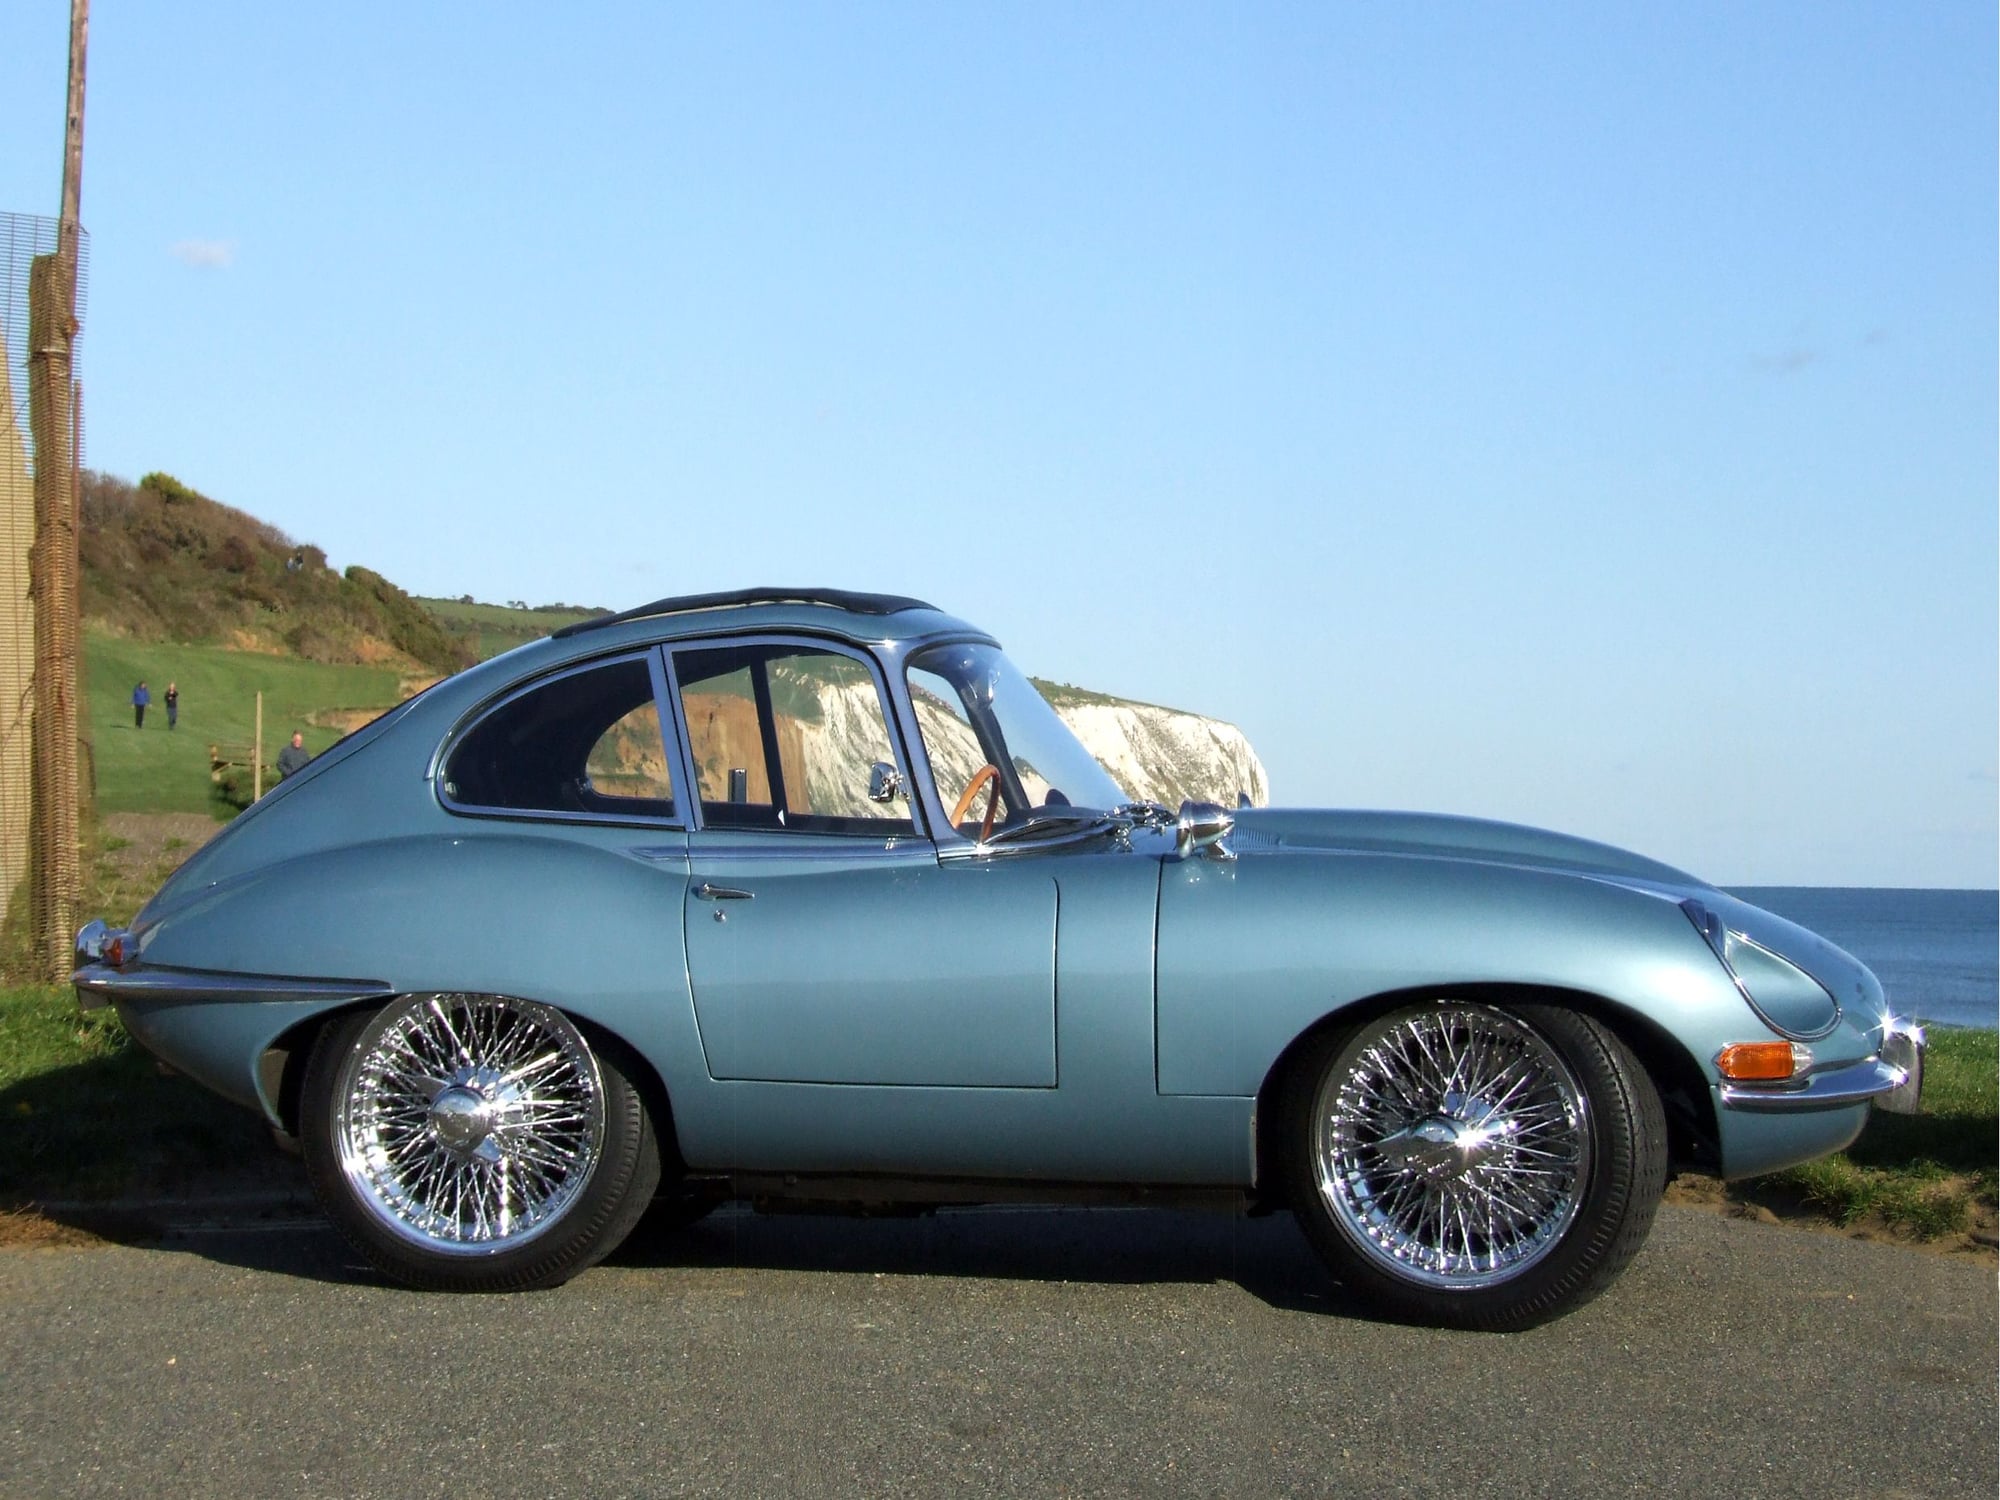 Smart car body kits - Jaguar Forums - Jaguar Enthusiasts Forum